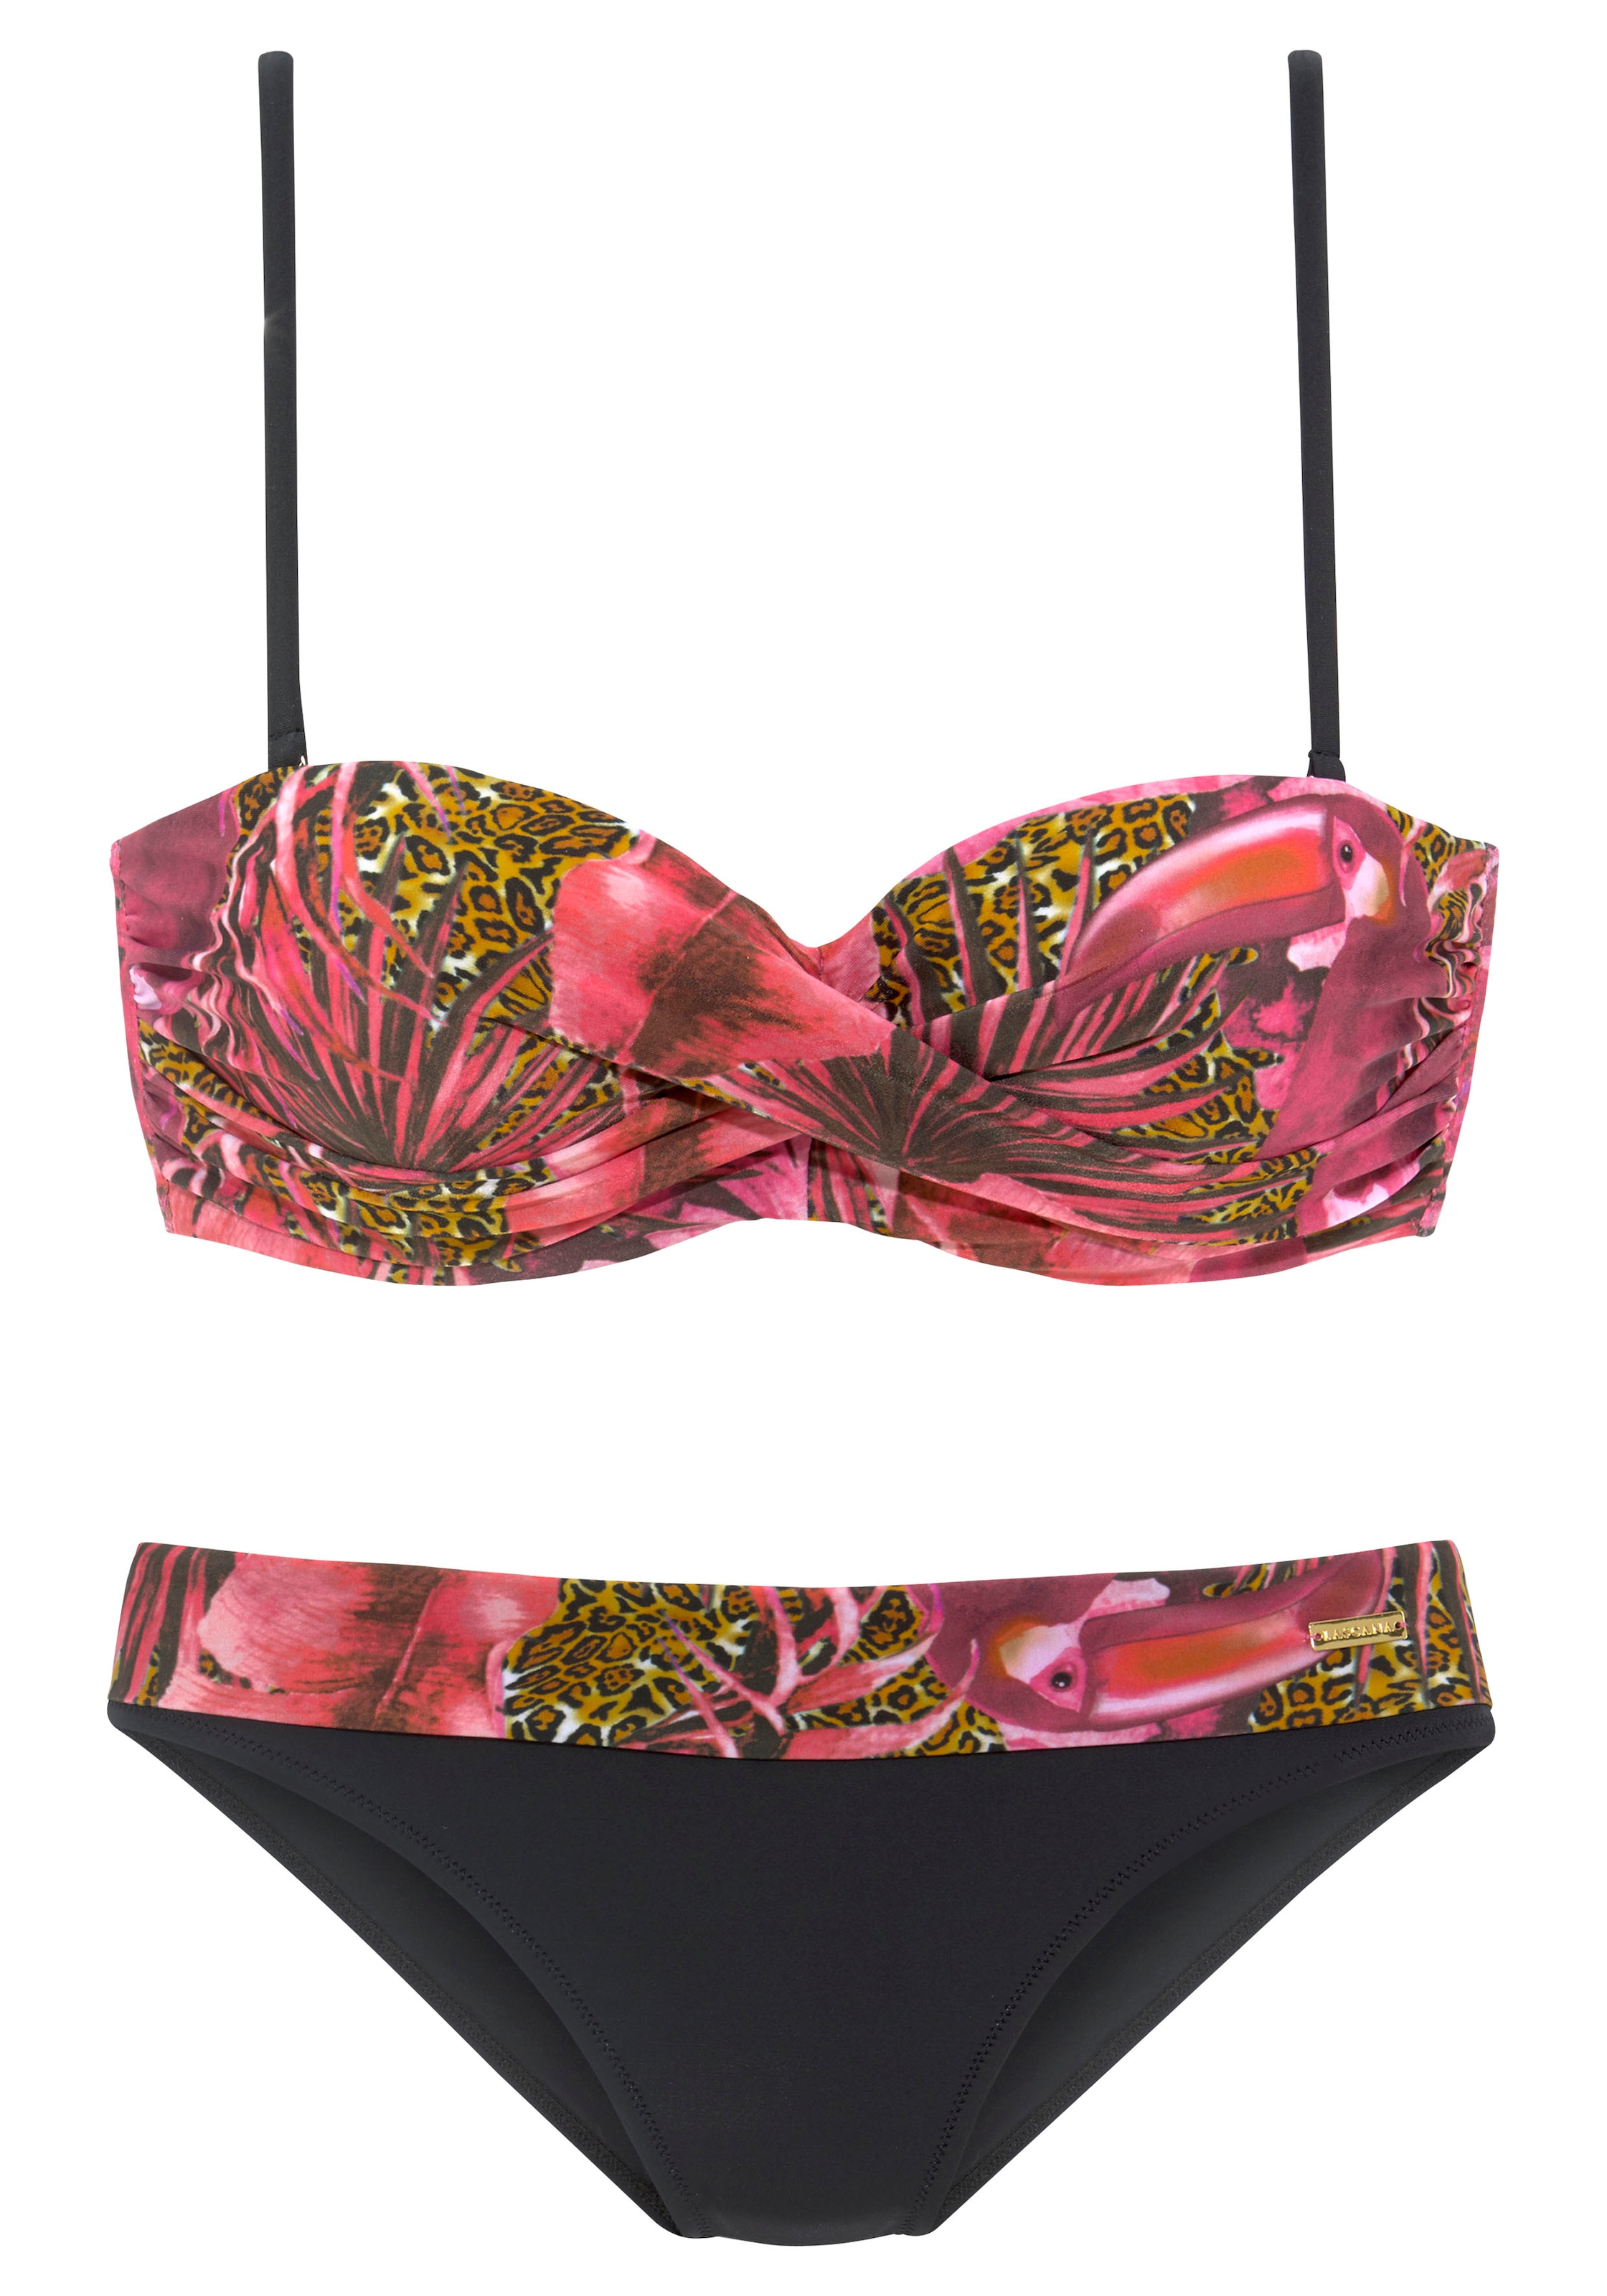 LASCANA Bügel-Bandeau-Bikini, mit Dschungel-Optik